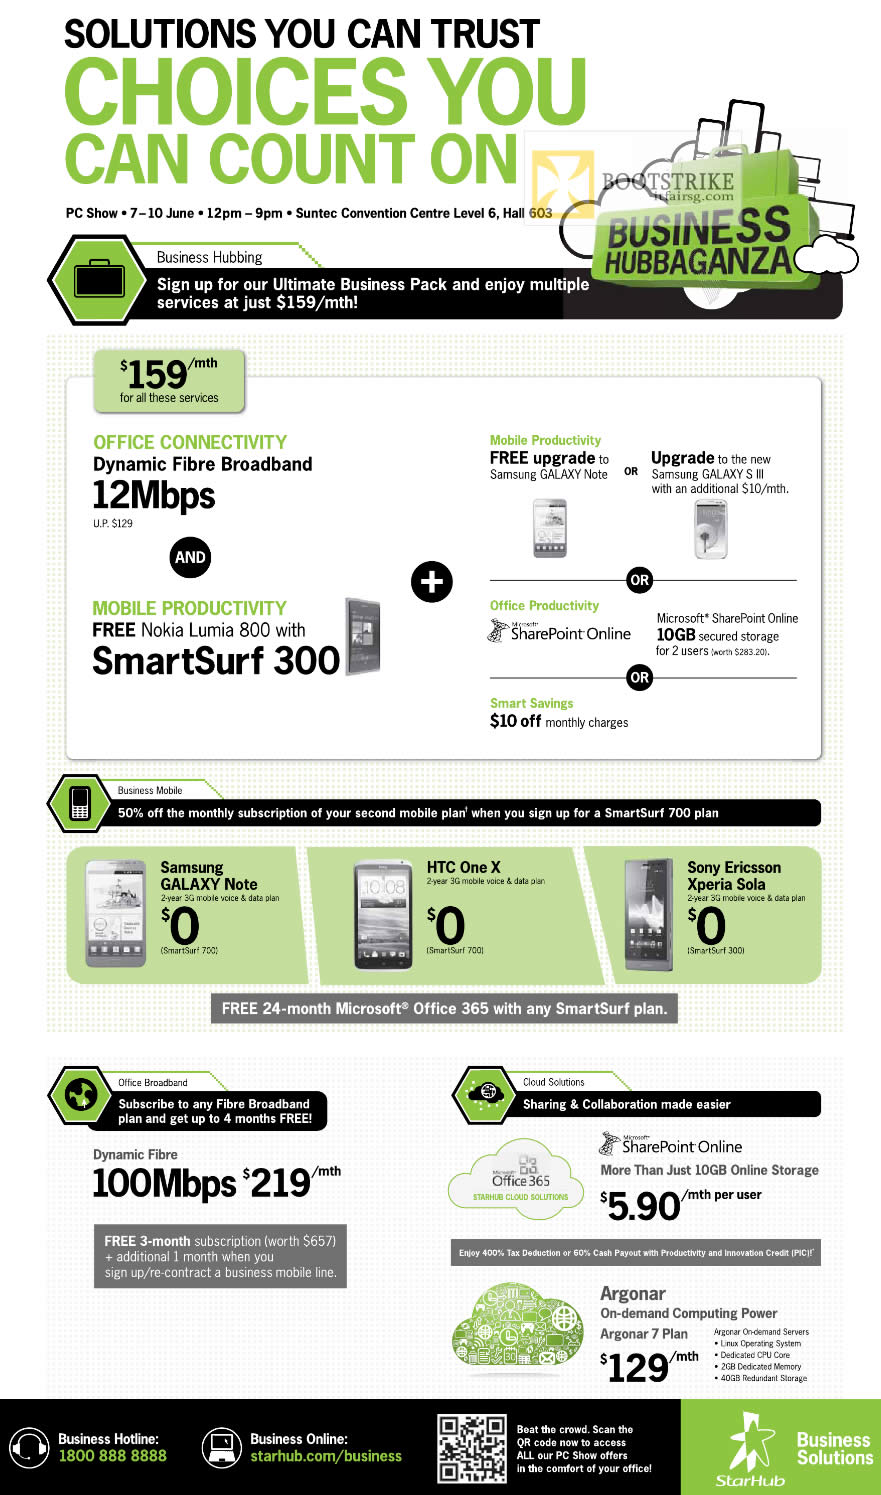 PC SHOW 2012 price list image brochure of Starhub Business Dynamic Fibre Broadband, Mobile Productivity, Office Sharepoint, Samsung Galaxy Note, HTC One X, Xperia Sola, Cloud, Argonar